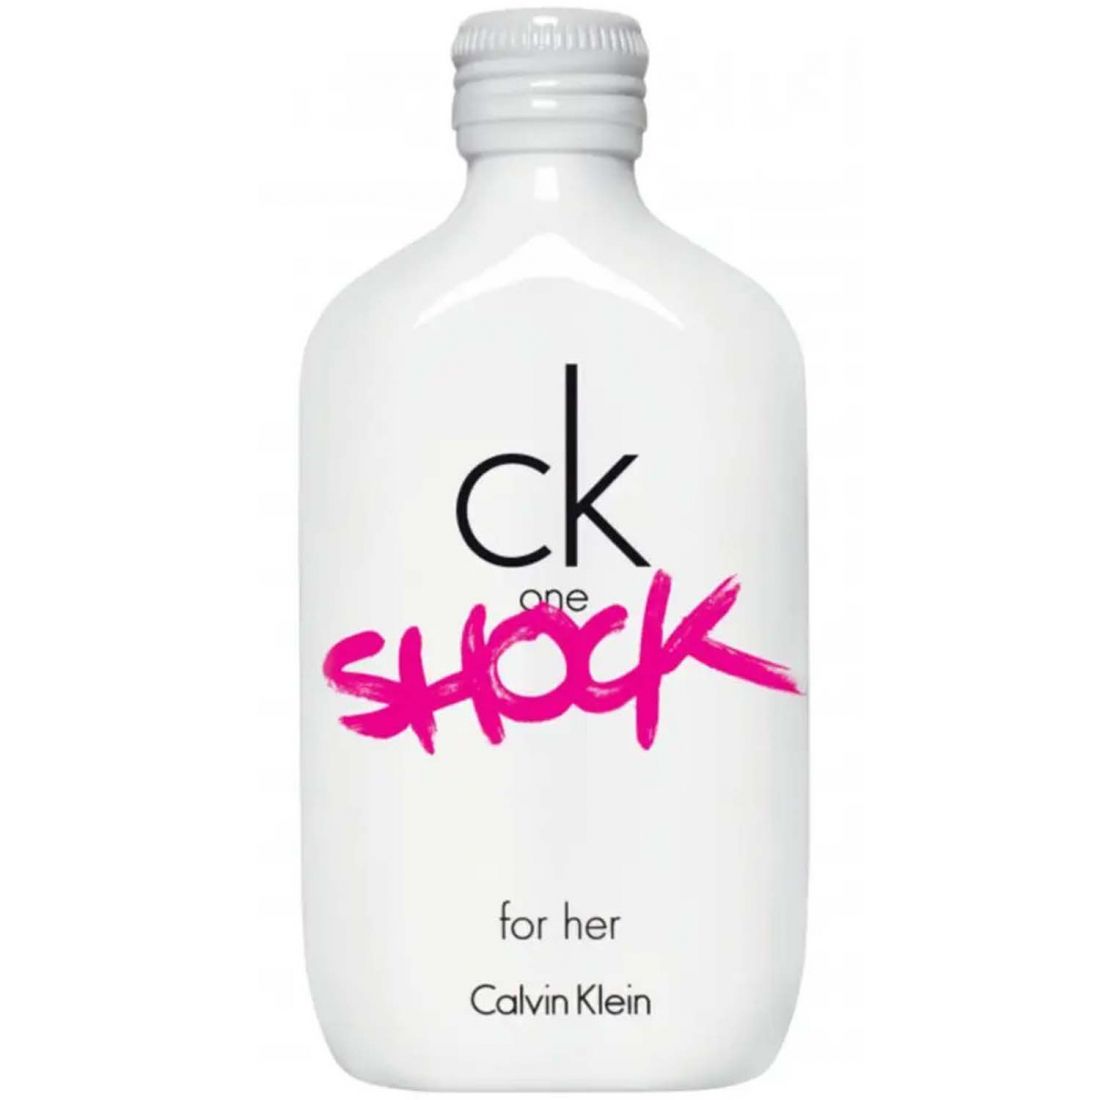 Calvin Klein - Eau de toilette 'CK One Shock For Her' - 200 ml